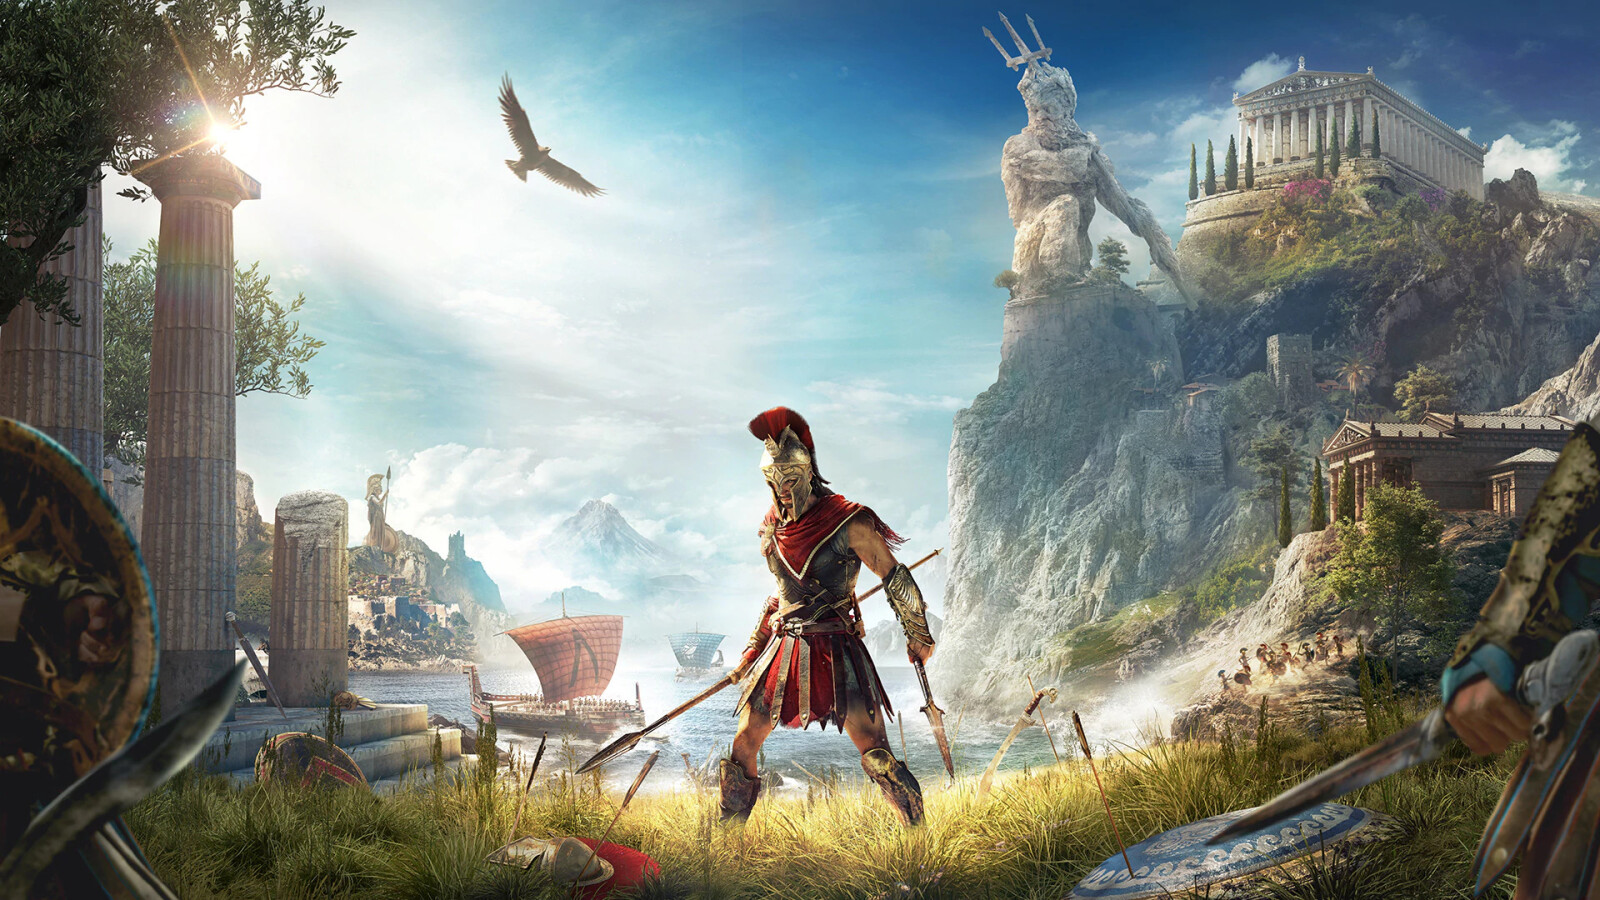 Juego gratuito para PC y consola: Assassin’s Creed Odyssey Free for Short